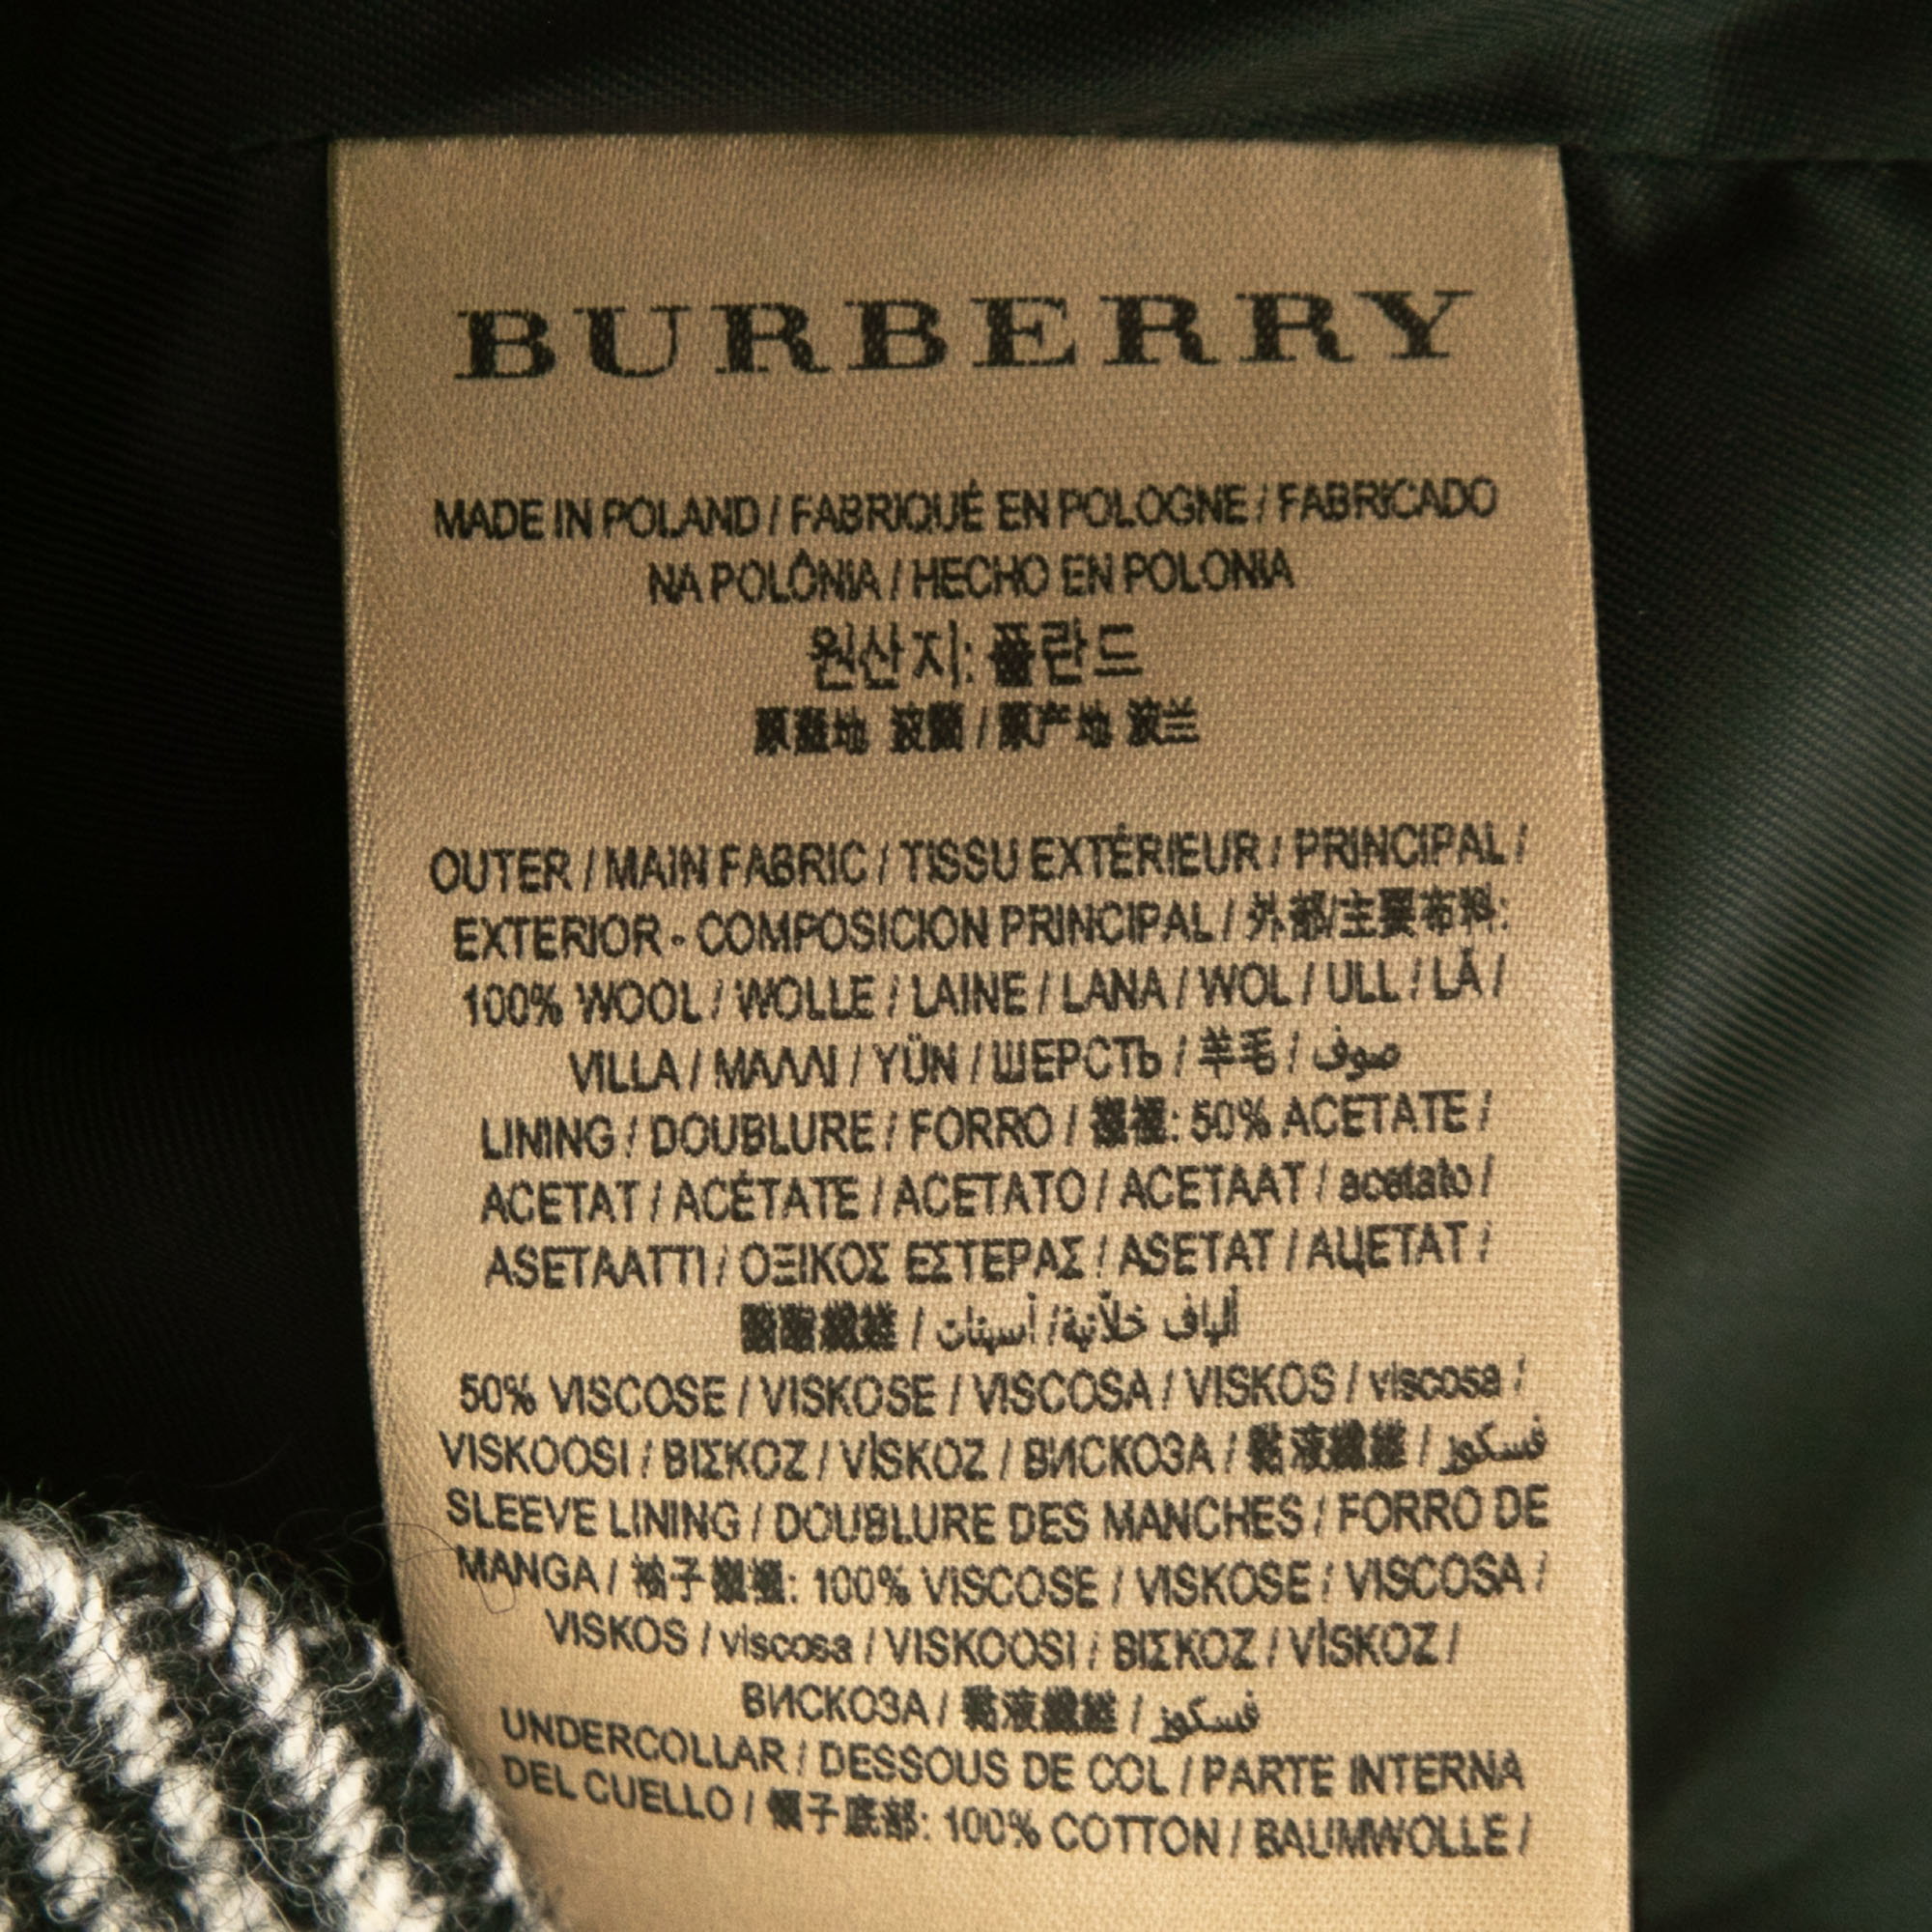 Burberry Black/White Patterned Wool Ruffled Jacket M